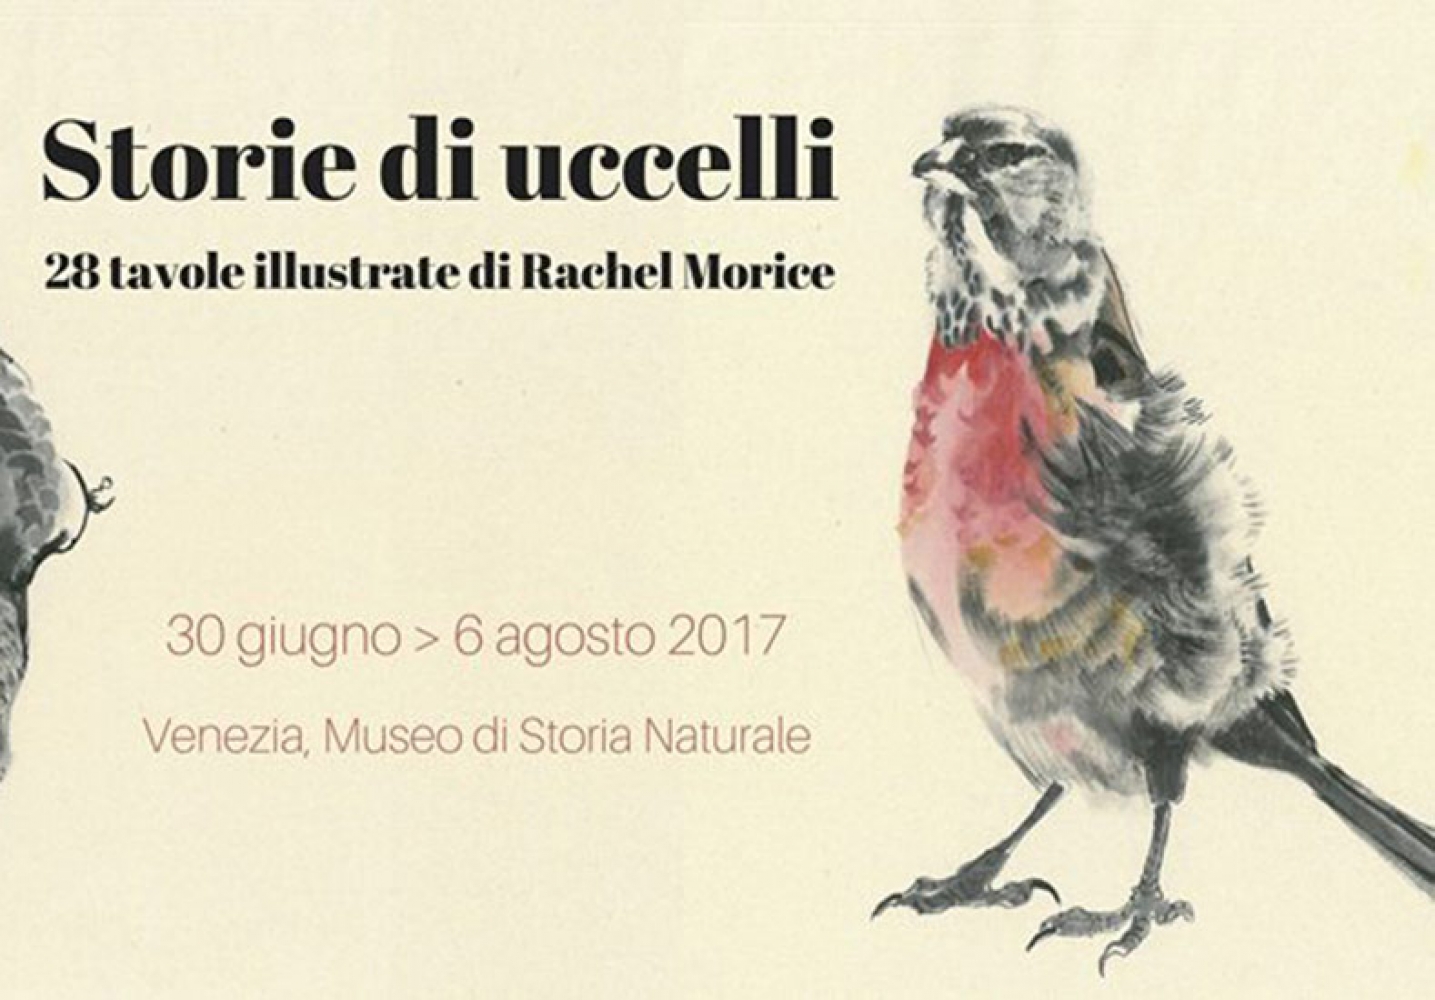 Poster of the exhibition “Storie Di Uccelli 28 Tavole illustrate di Rachel Morice”